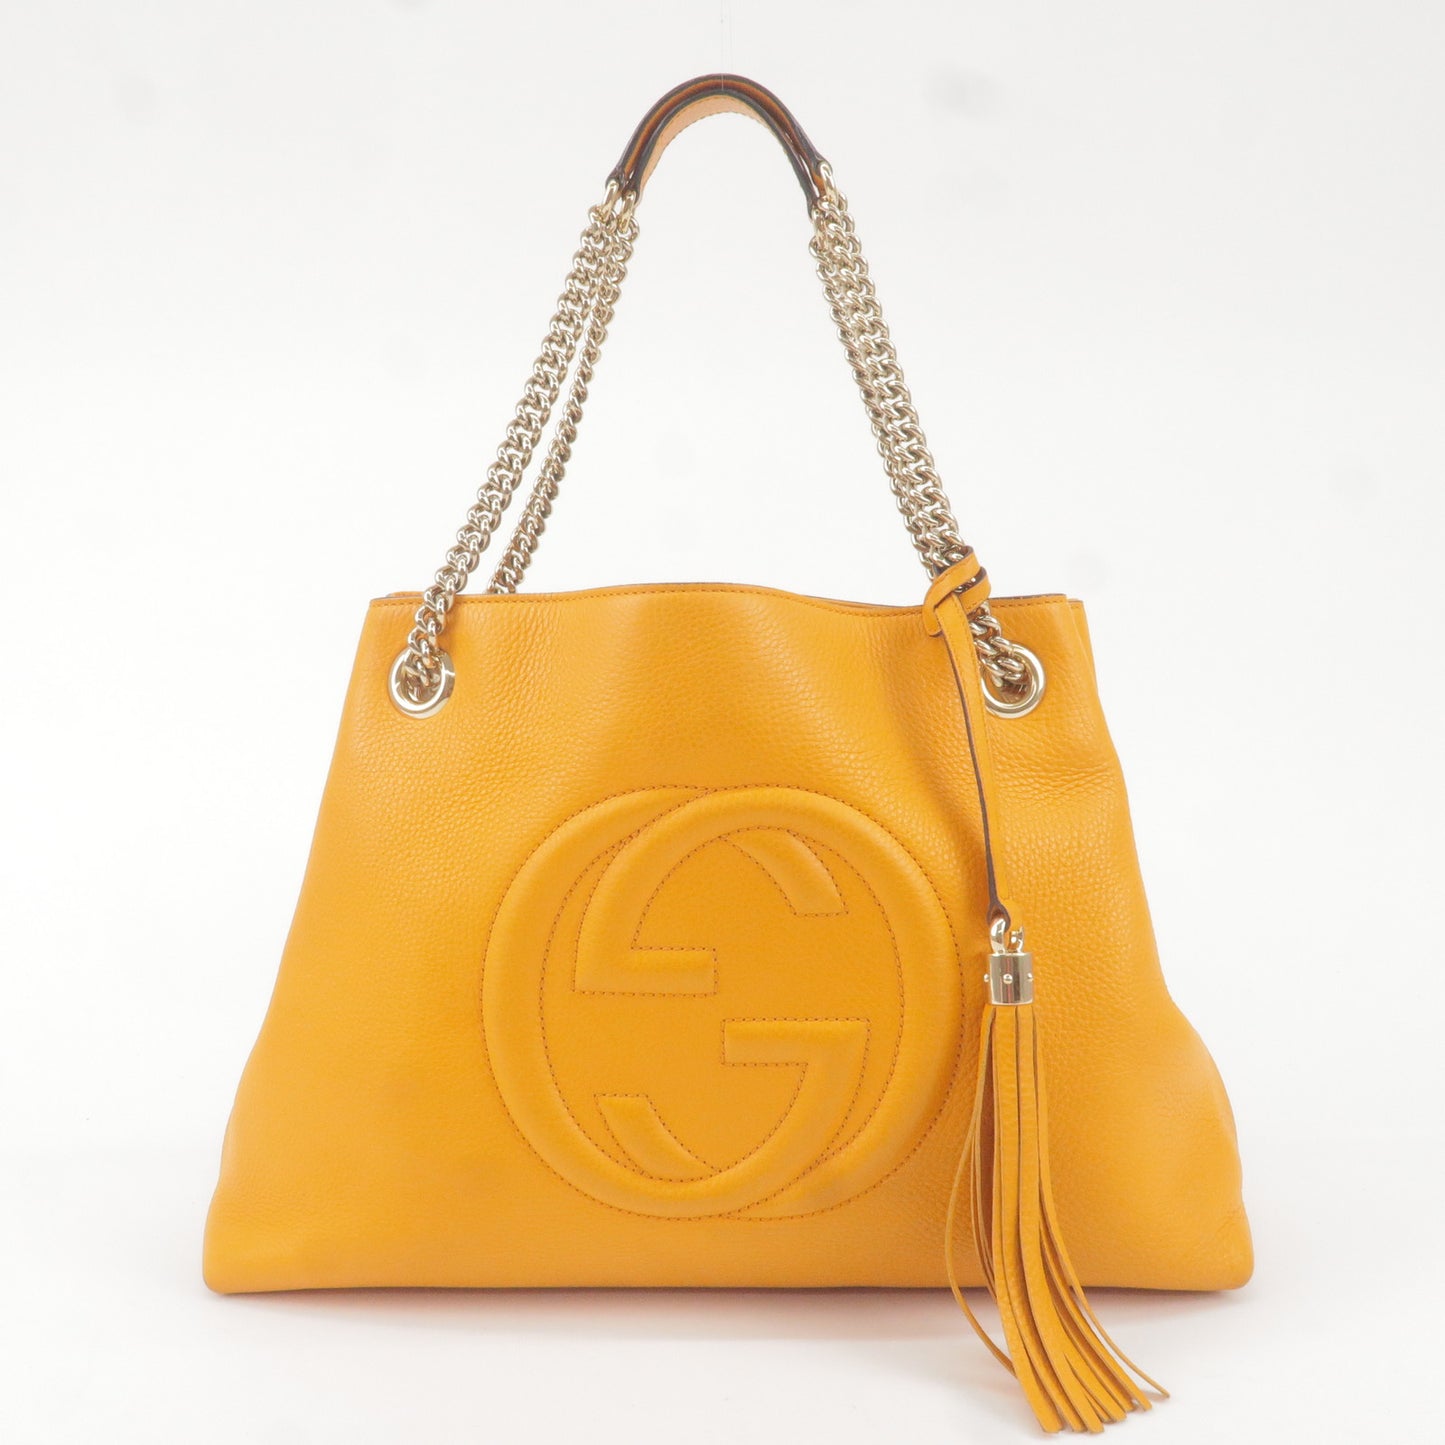 GUCCI SOHO Leather Chain Shoulder Bag Orange 308982